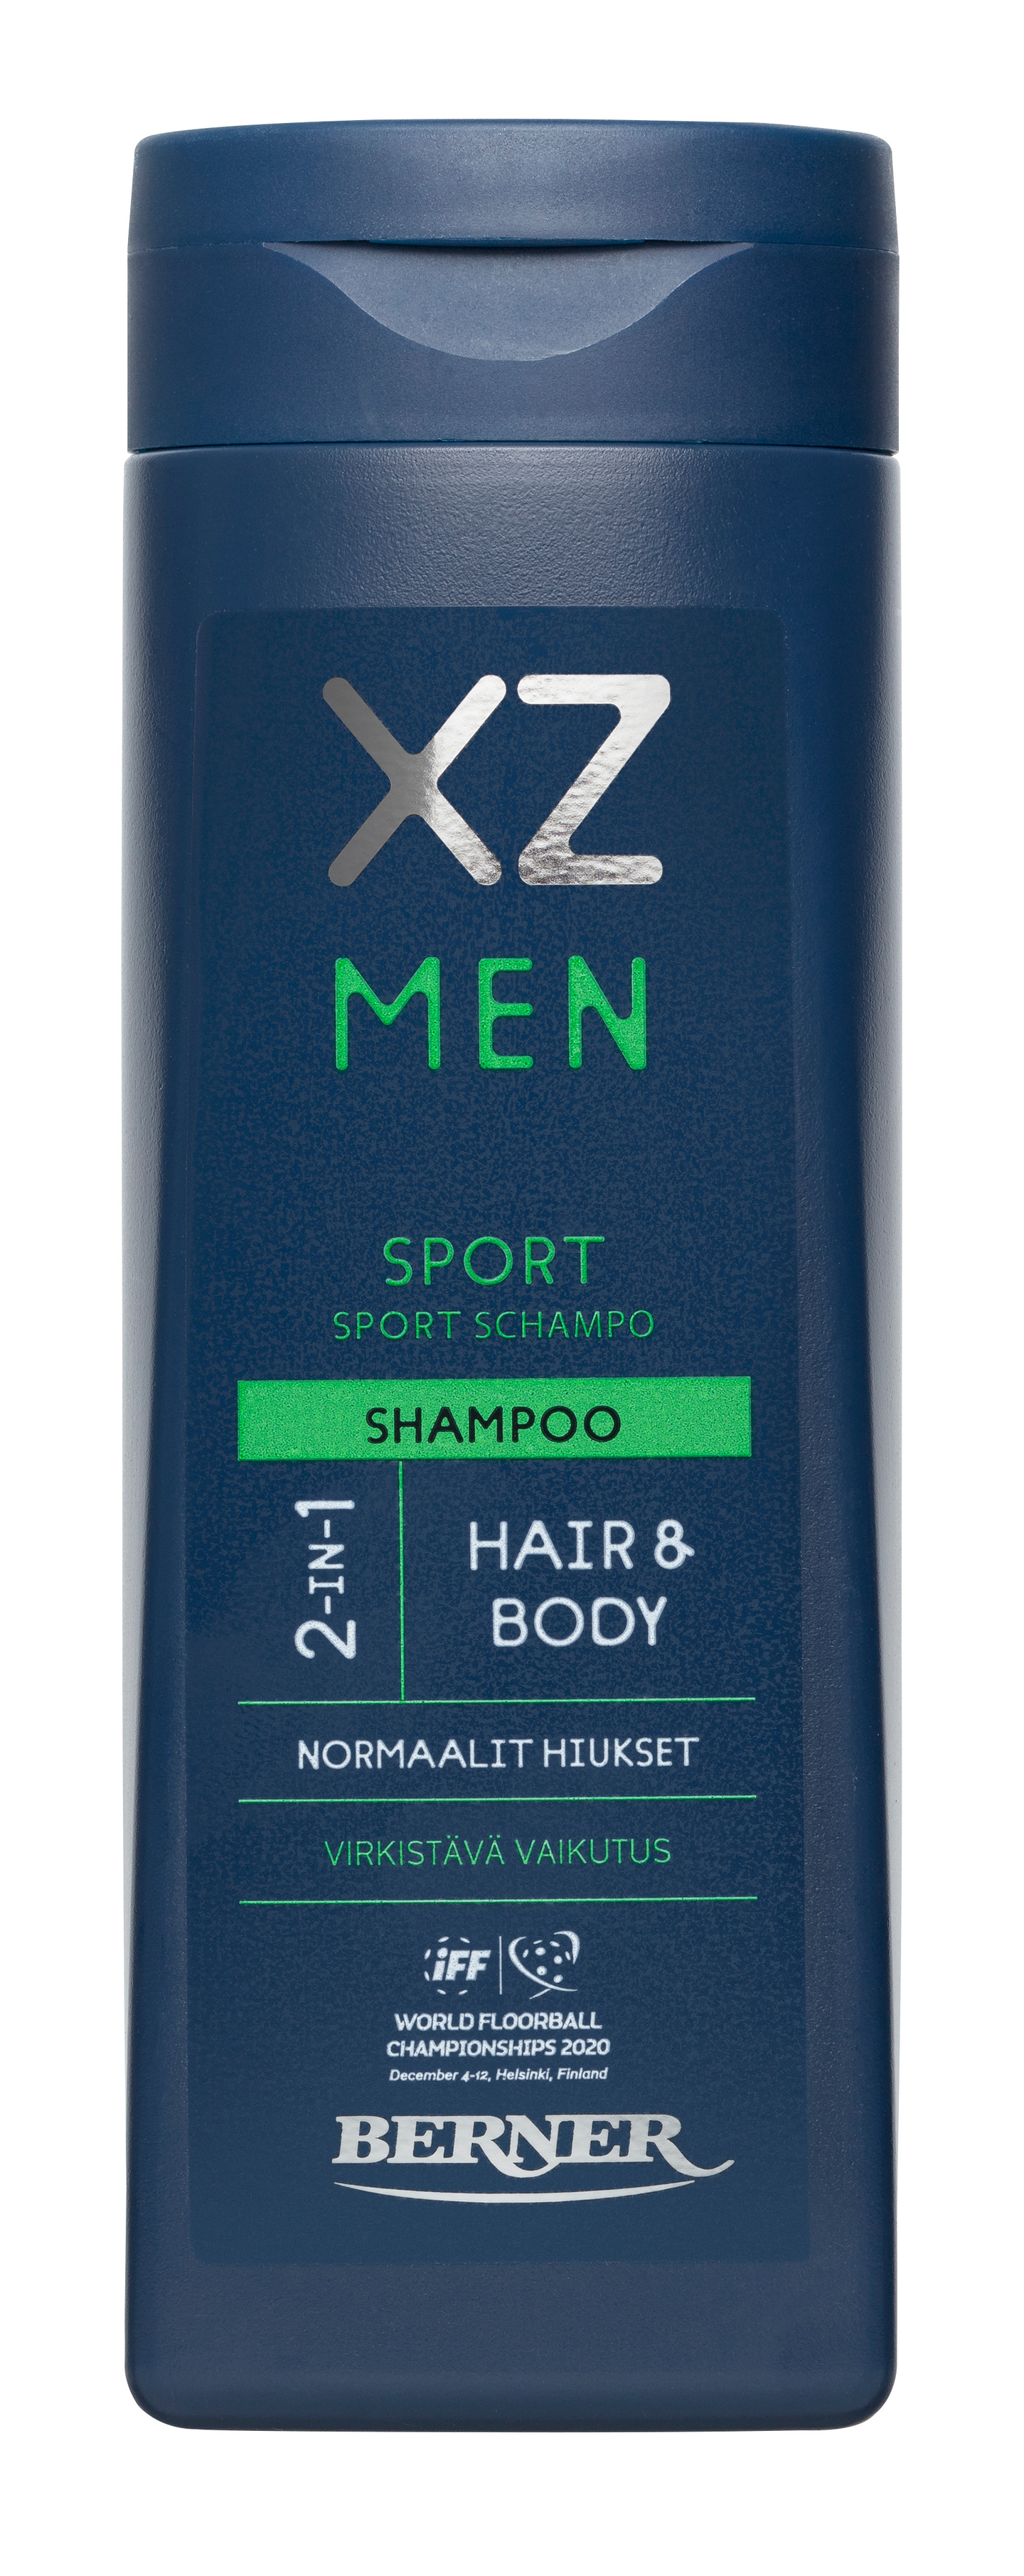 XZ Men shampoo 250ml 2in1 sport